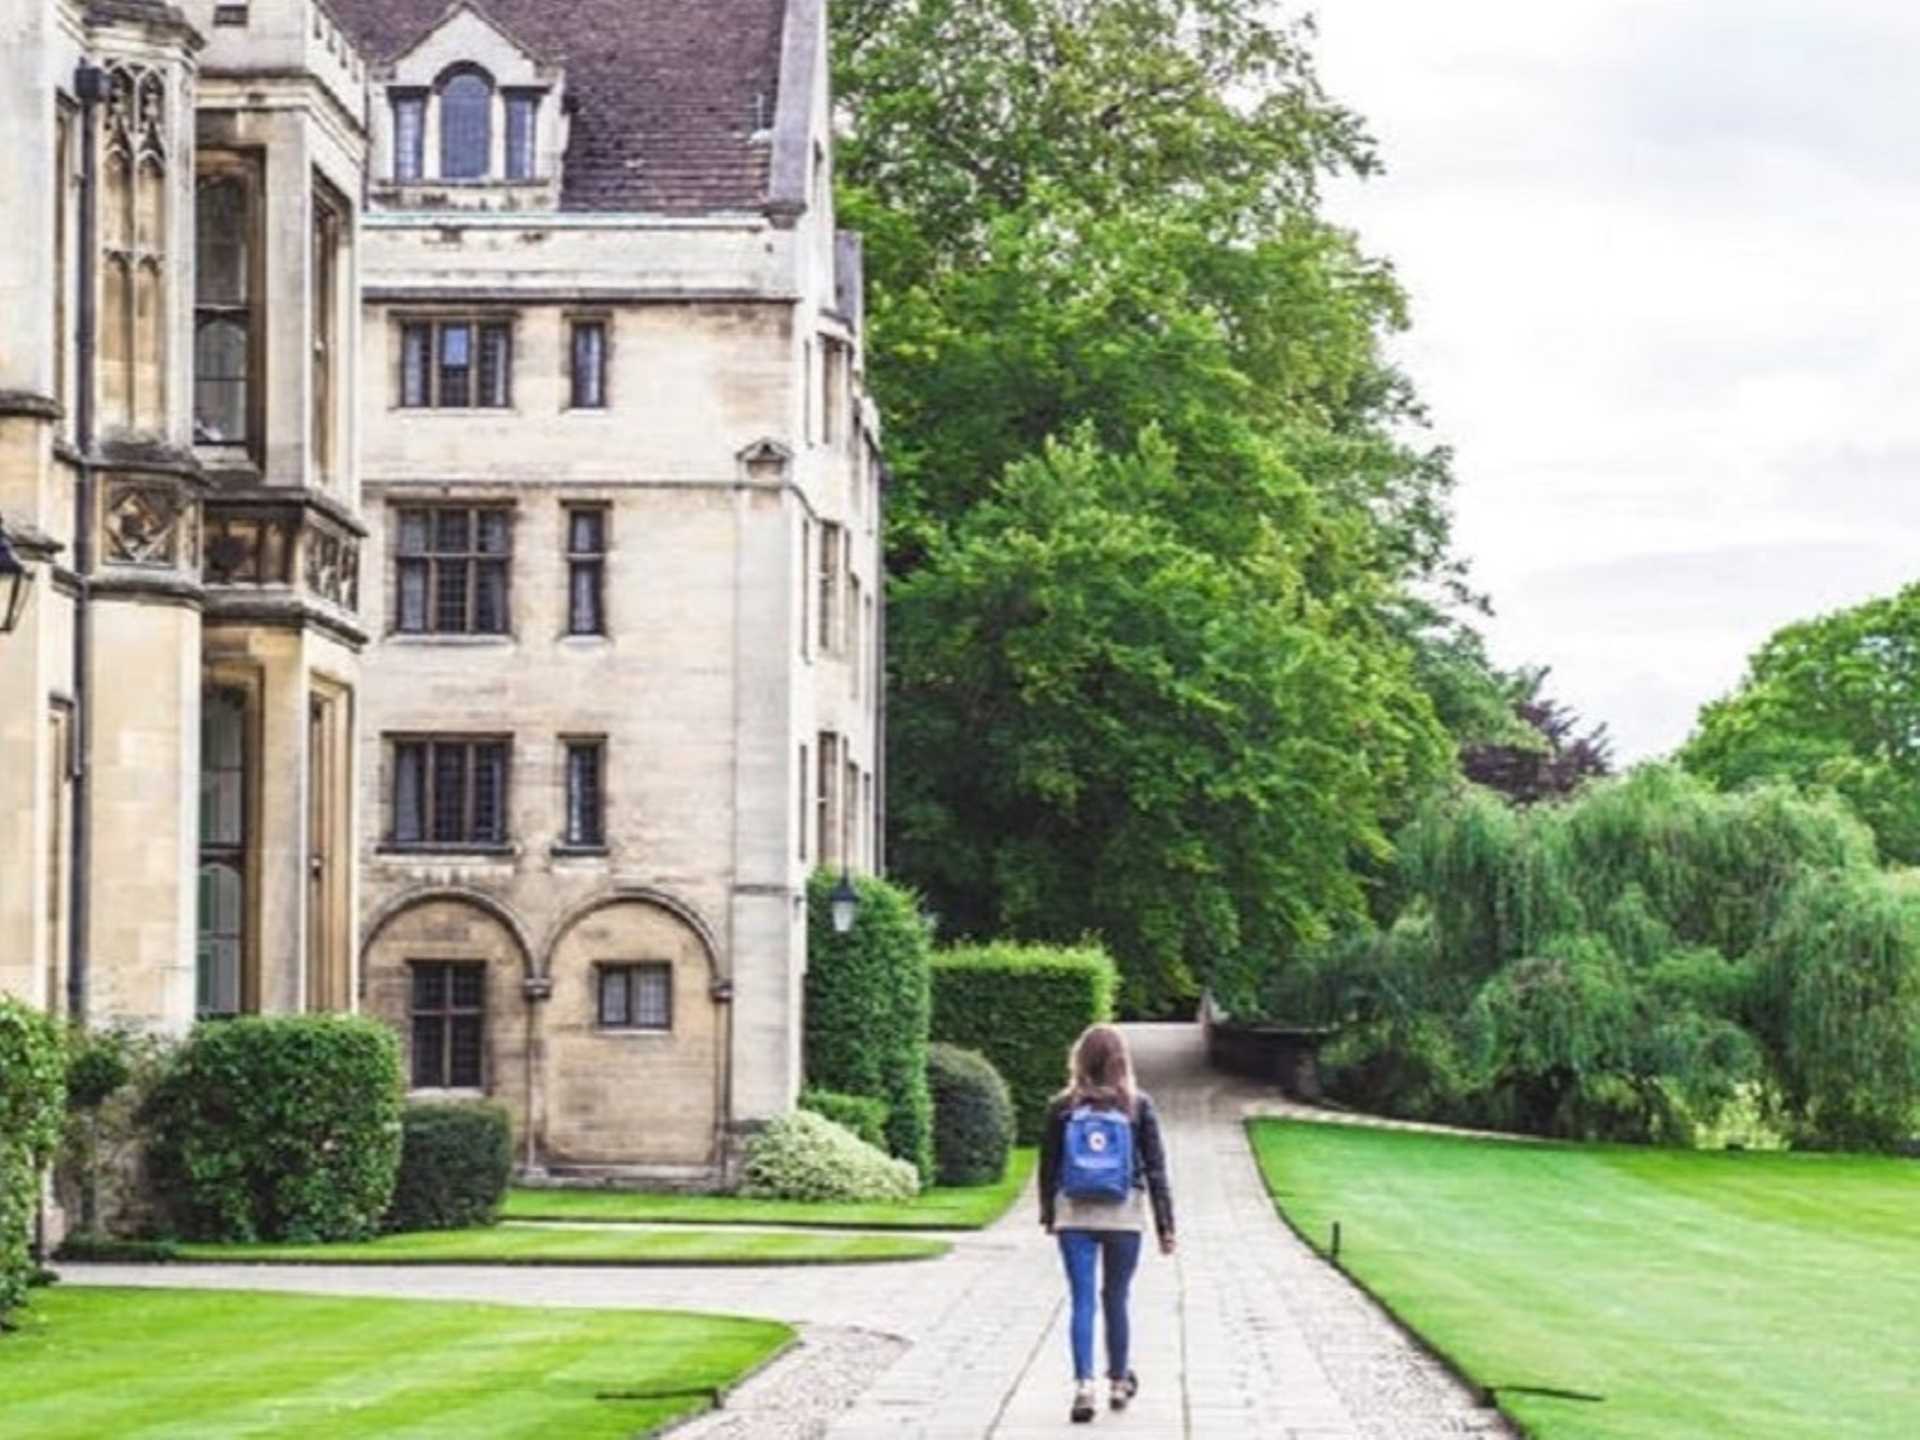 Combined Cambridge University Walking Tour & Punting Tour Led By University Students